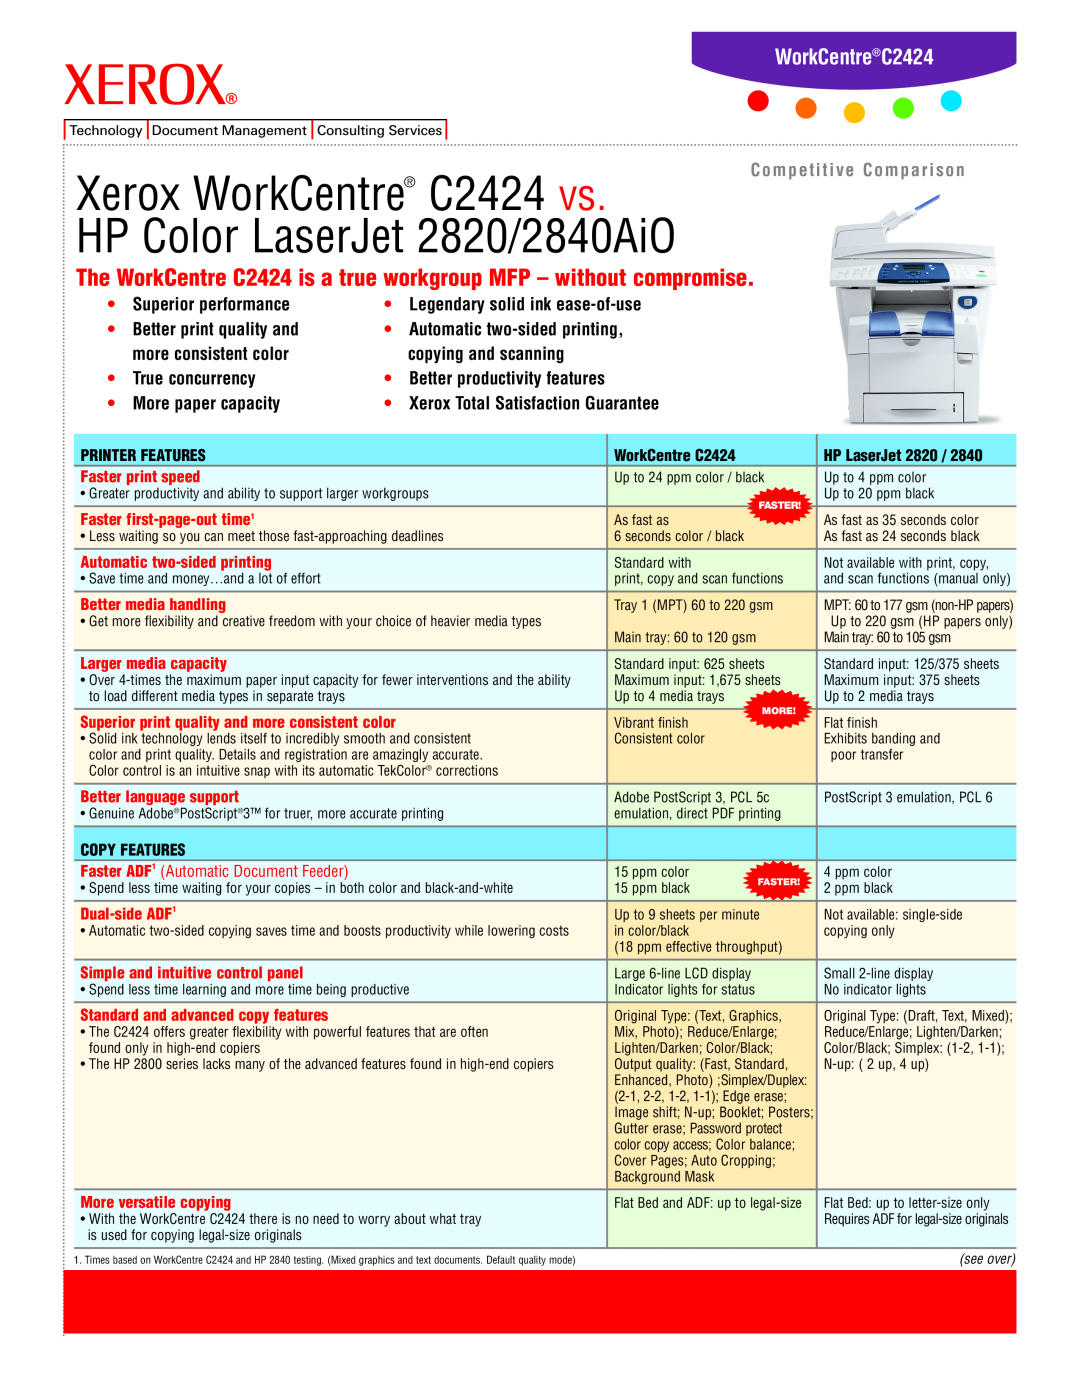 Xerox manual WorkCentre C2424 Copier-Printer, Loading Media 